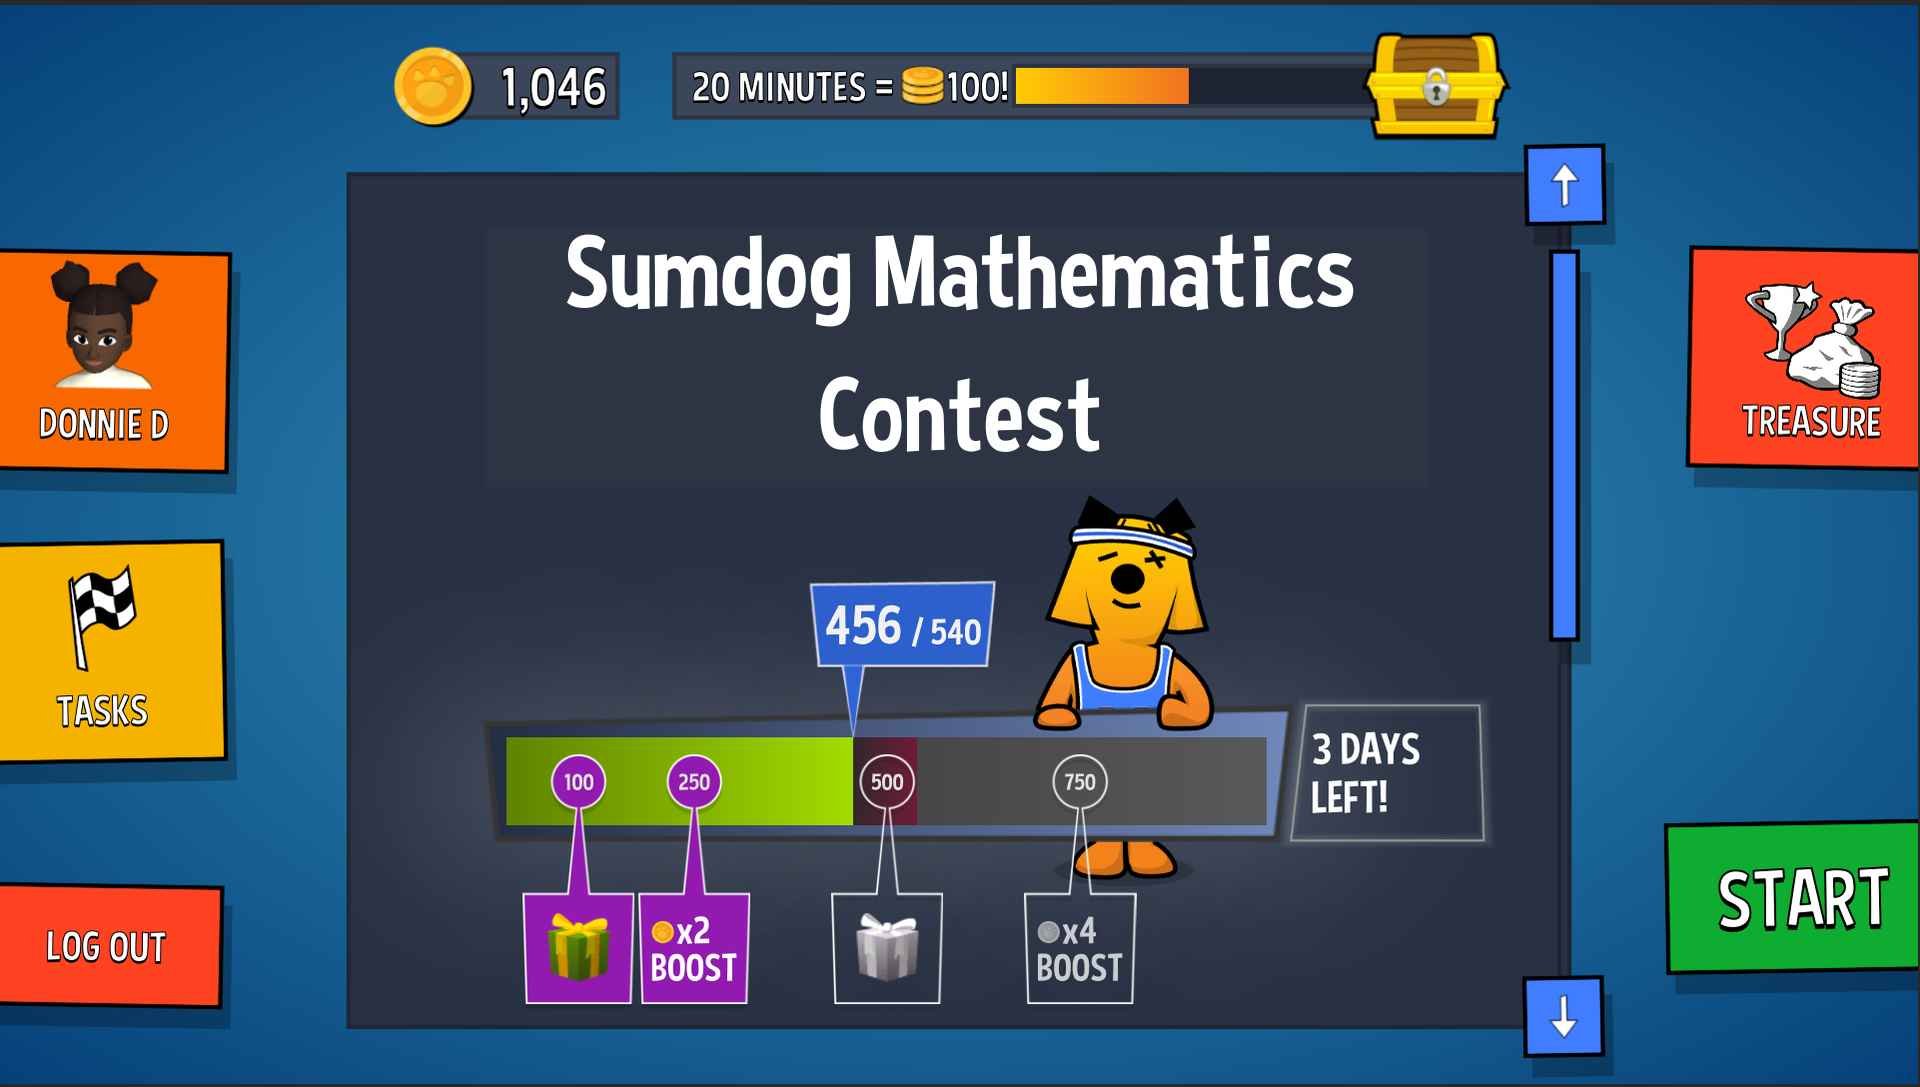 Sumdog contest prizes